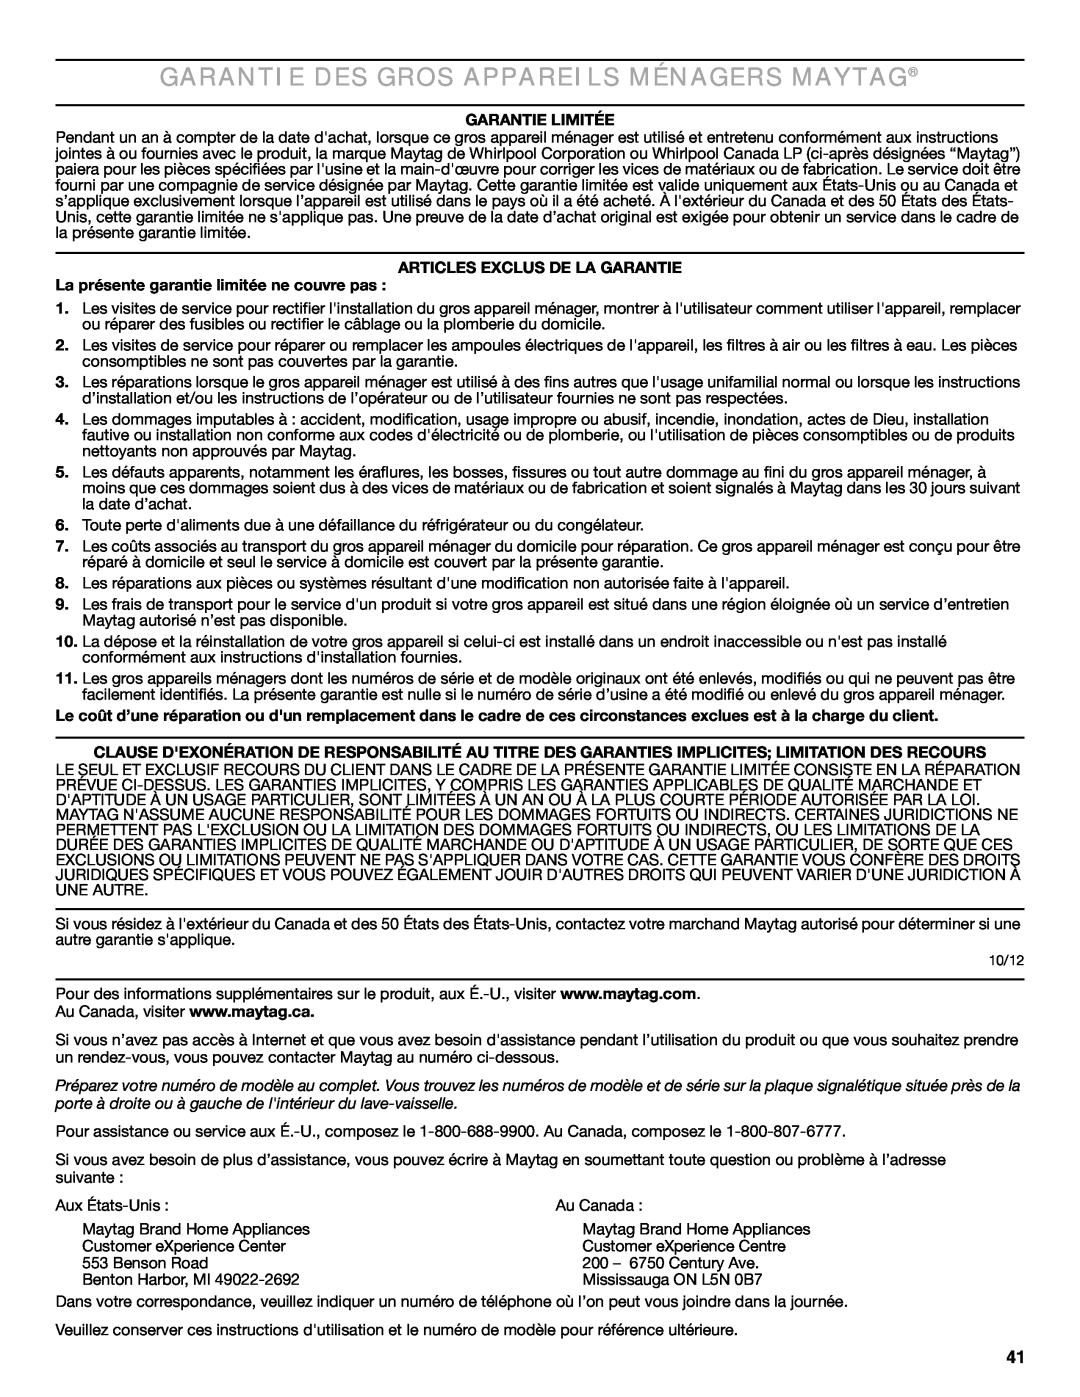 Maytag MDB6600WH warranty Garantie Des Gros Appareils Ménagers Maytag, Garantie Limitée, Articles Exclus De La Garantie 